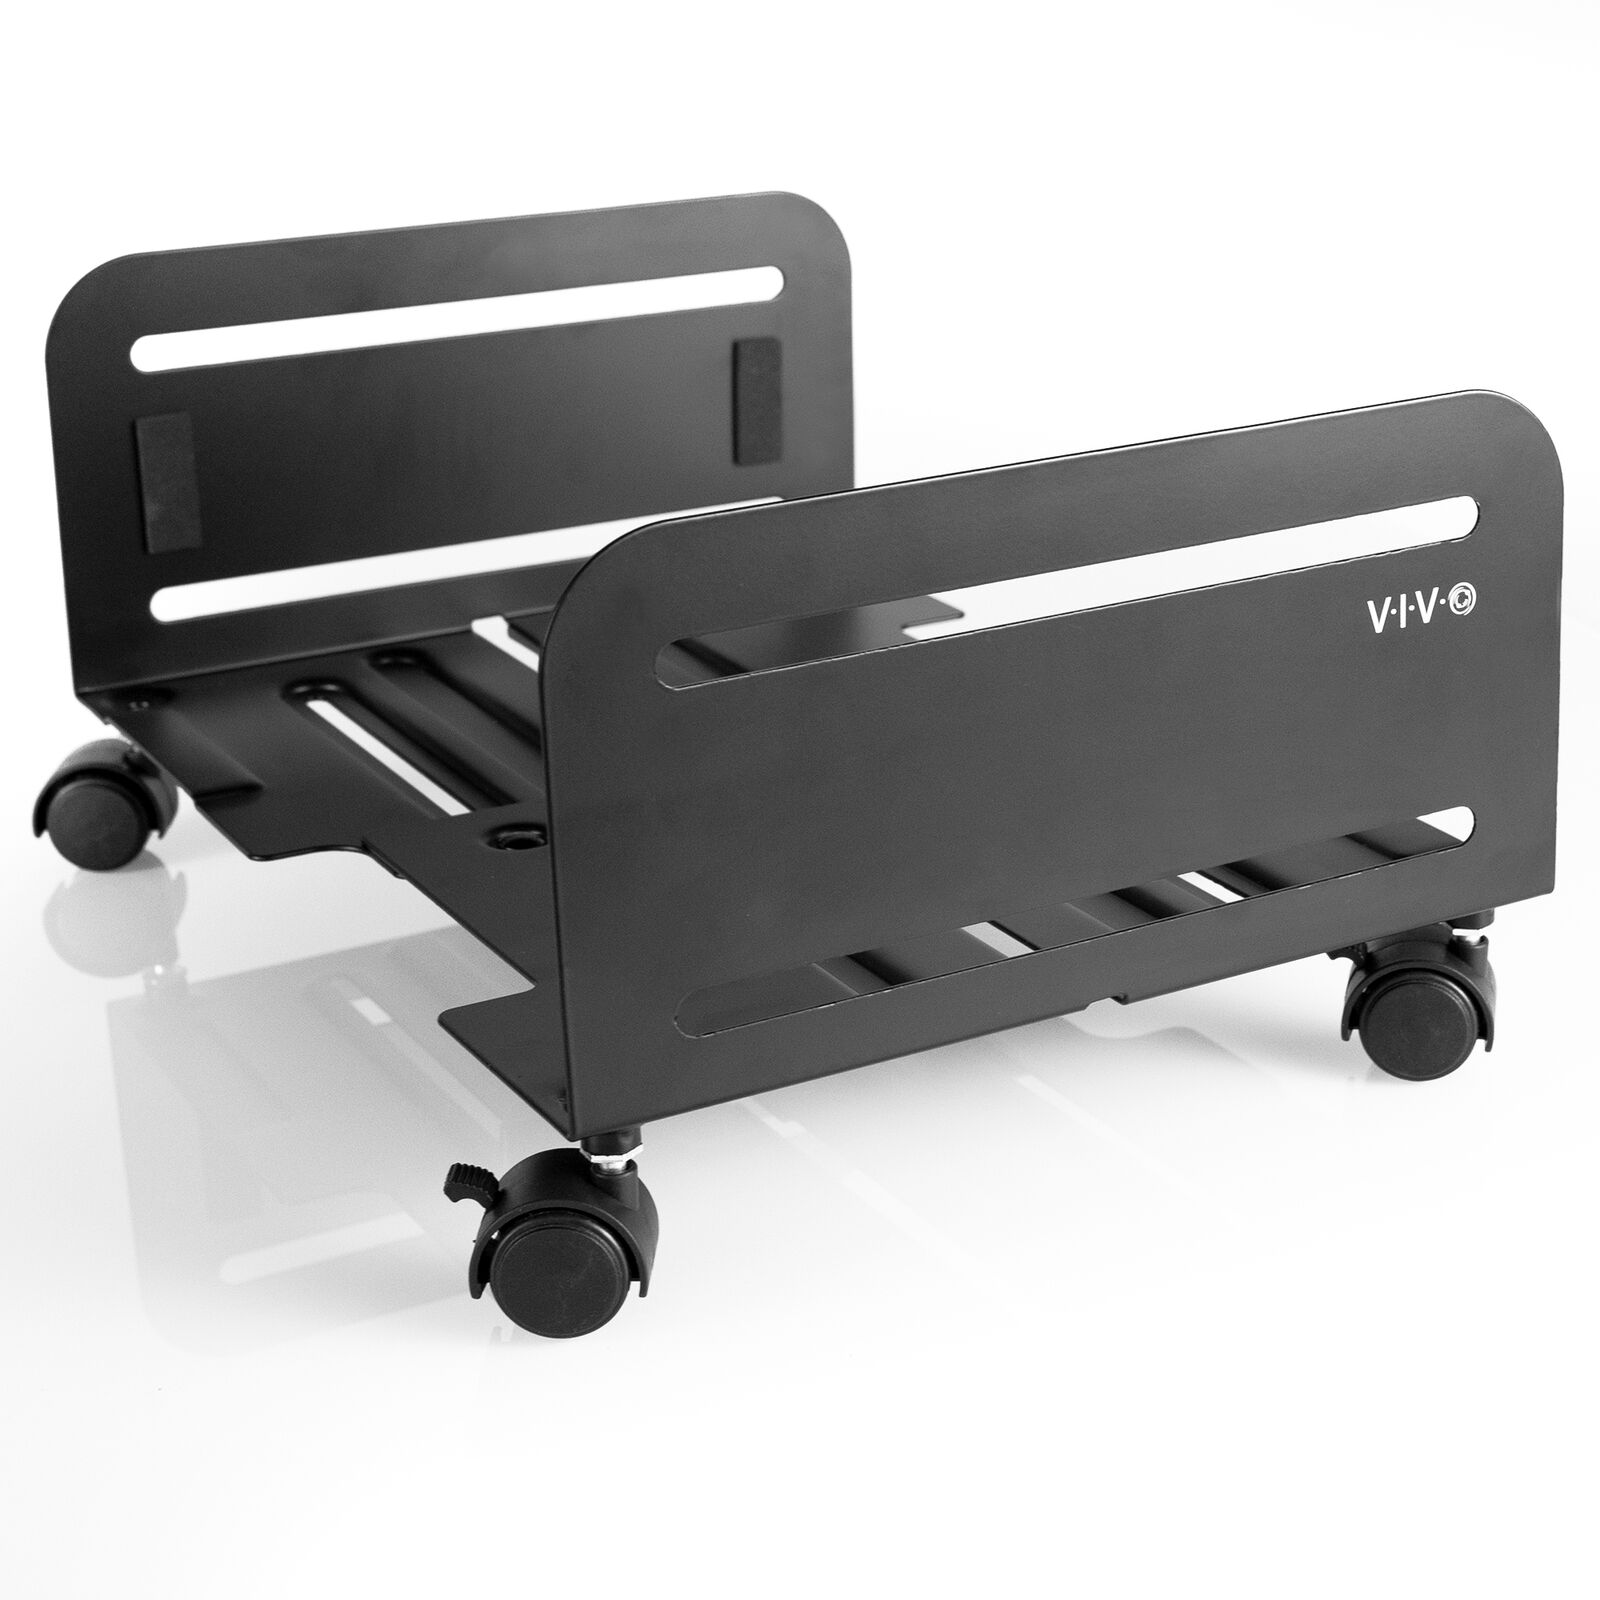 VIVO Black Computer Large Desktop ATX Case, CPU Rolling Stand, Adjustable Cart